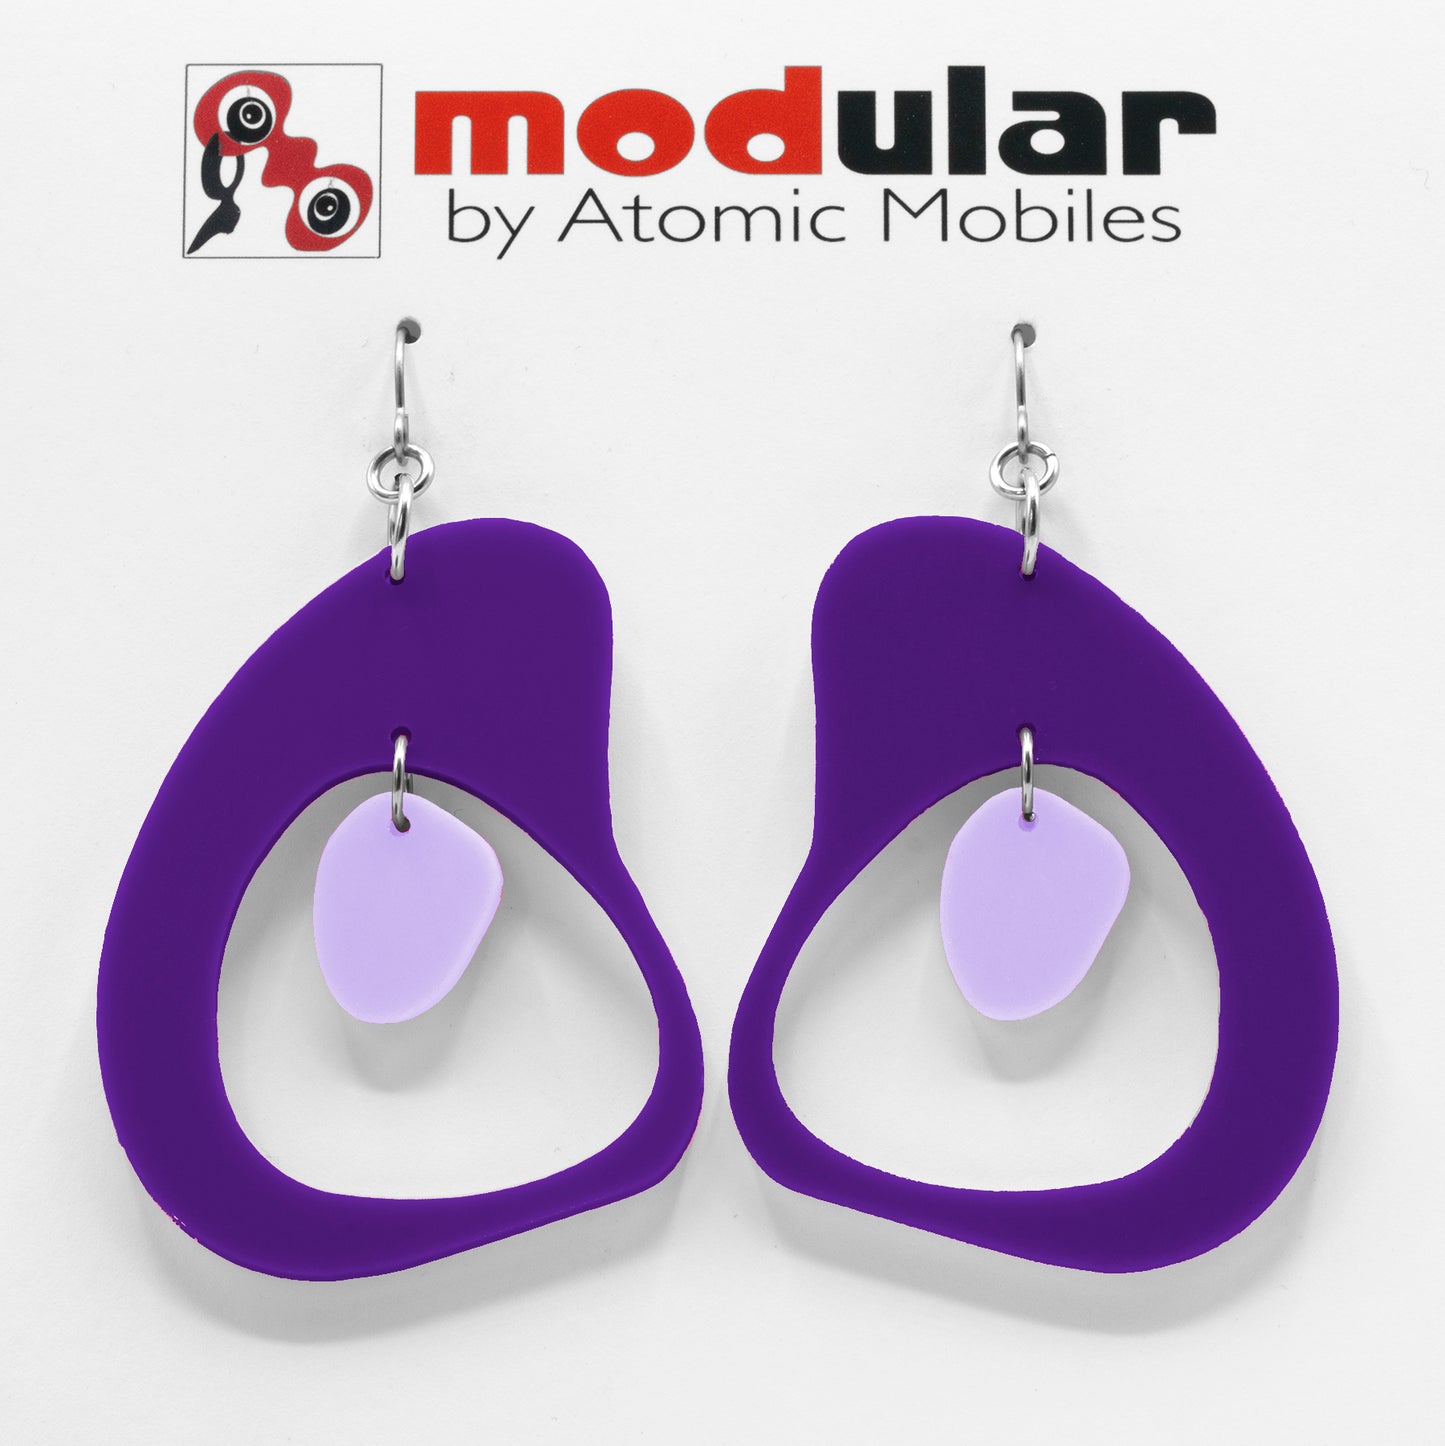 MODular Earrings - Boomerang Statement Earrings in Purple by AtomicMobiles.com - retro era inspired mod handmade jewelry